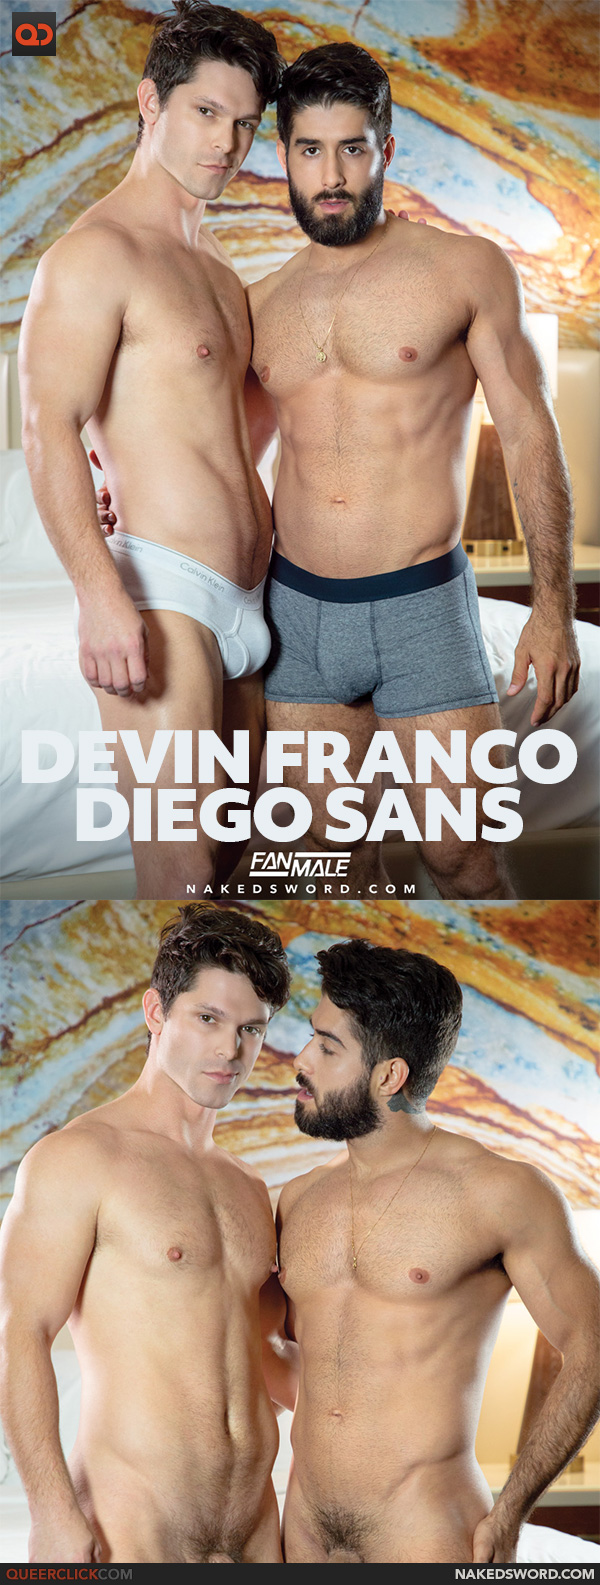 Naked Sword: Devin Franco and Diego Sans